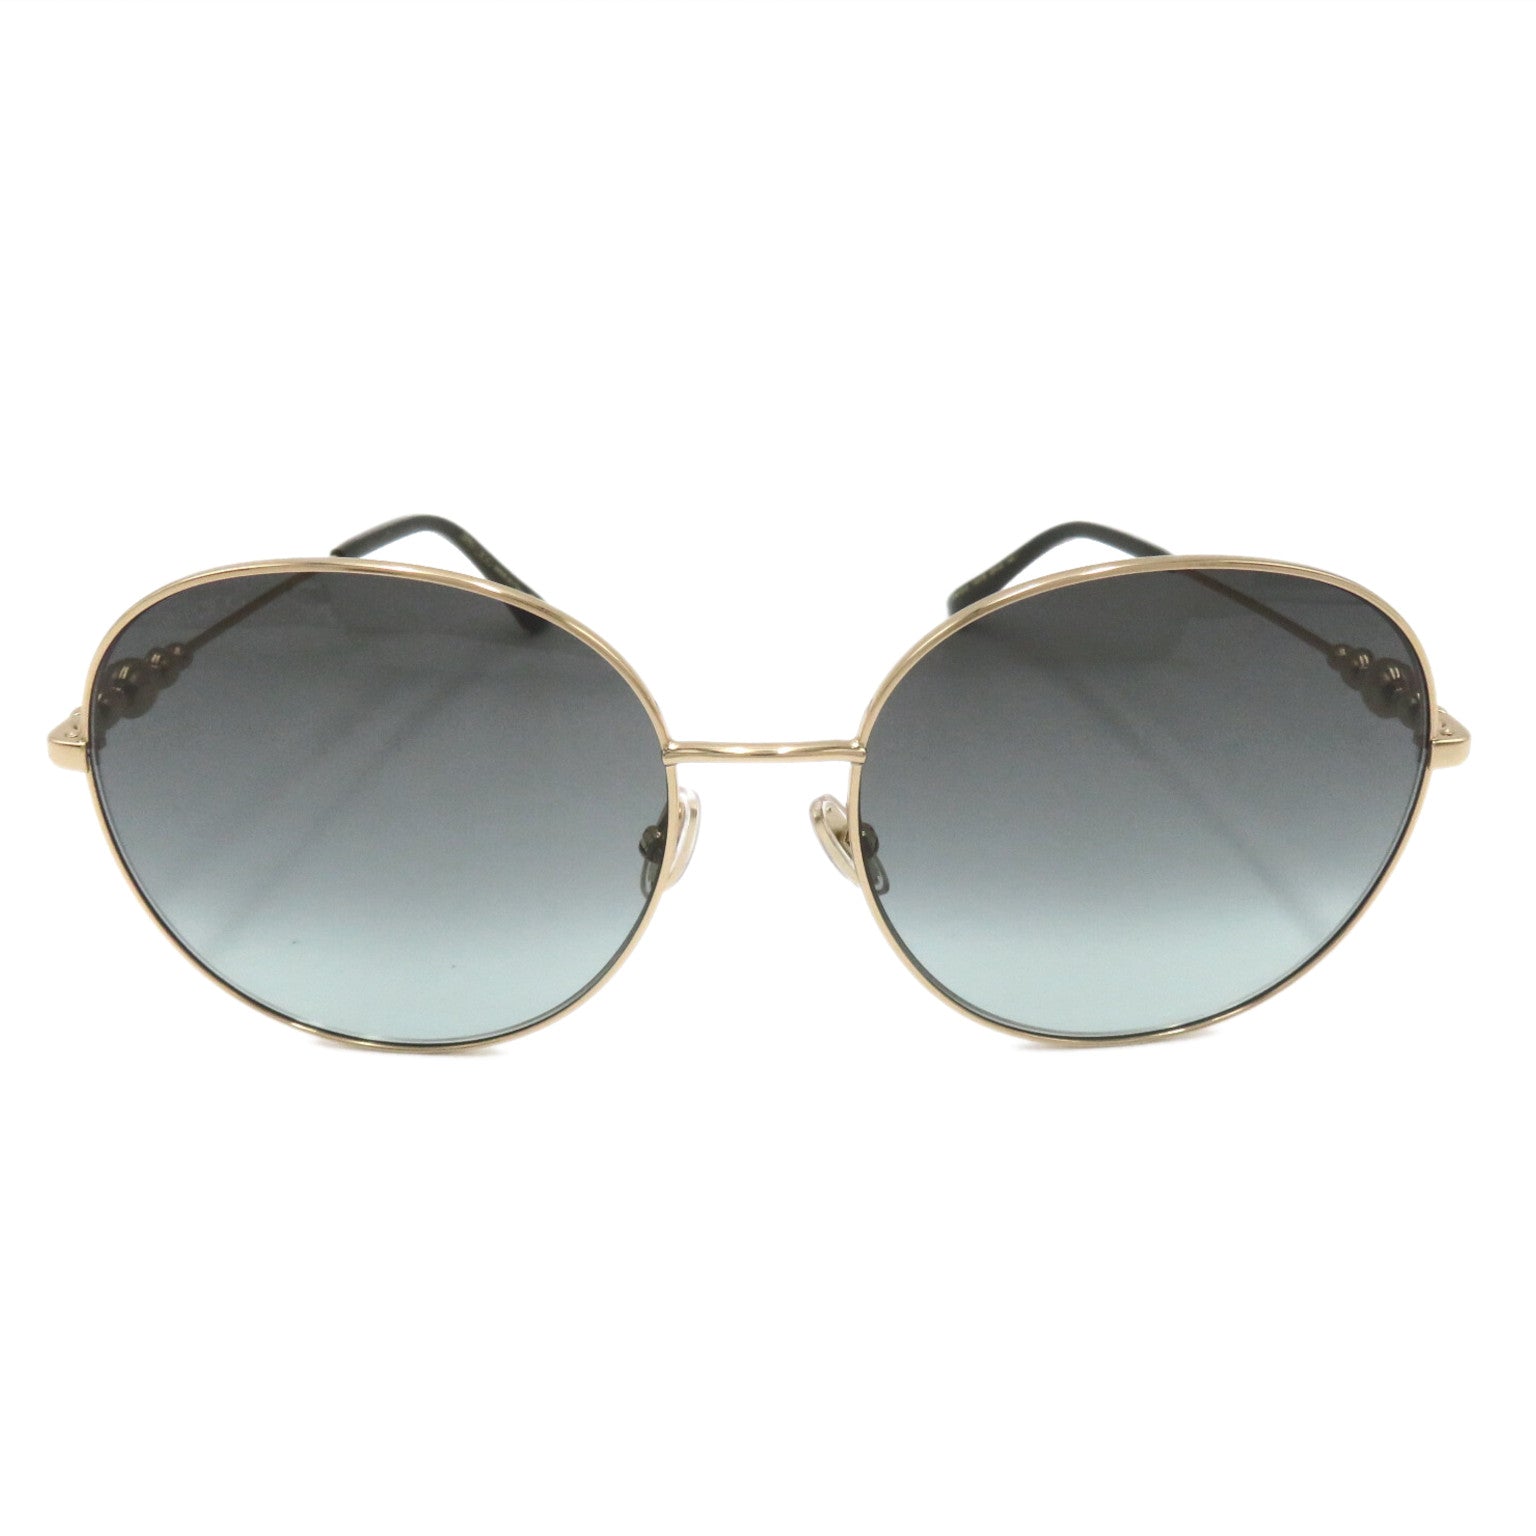 Jimmy Choo Sunglasses Grey Smoked Lens